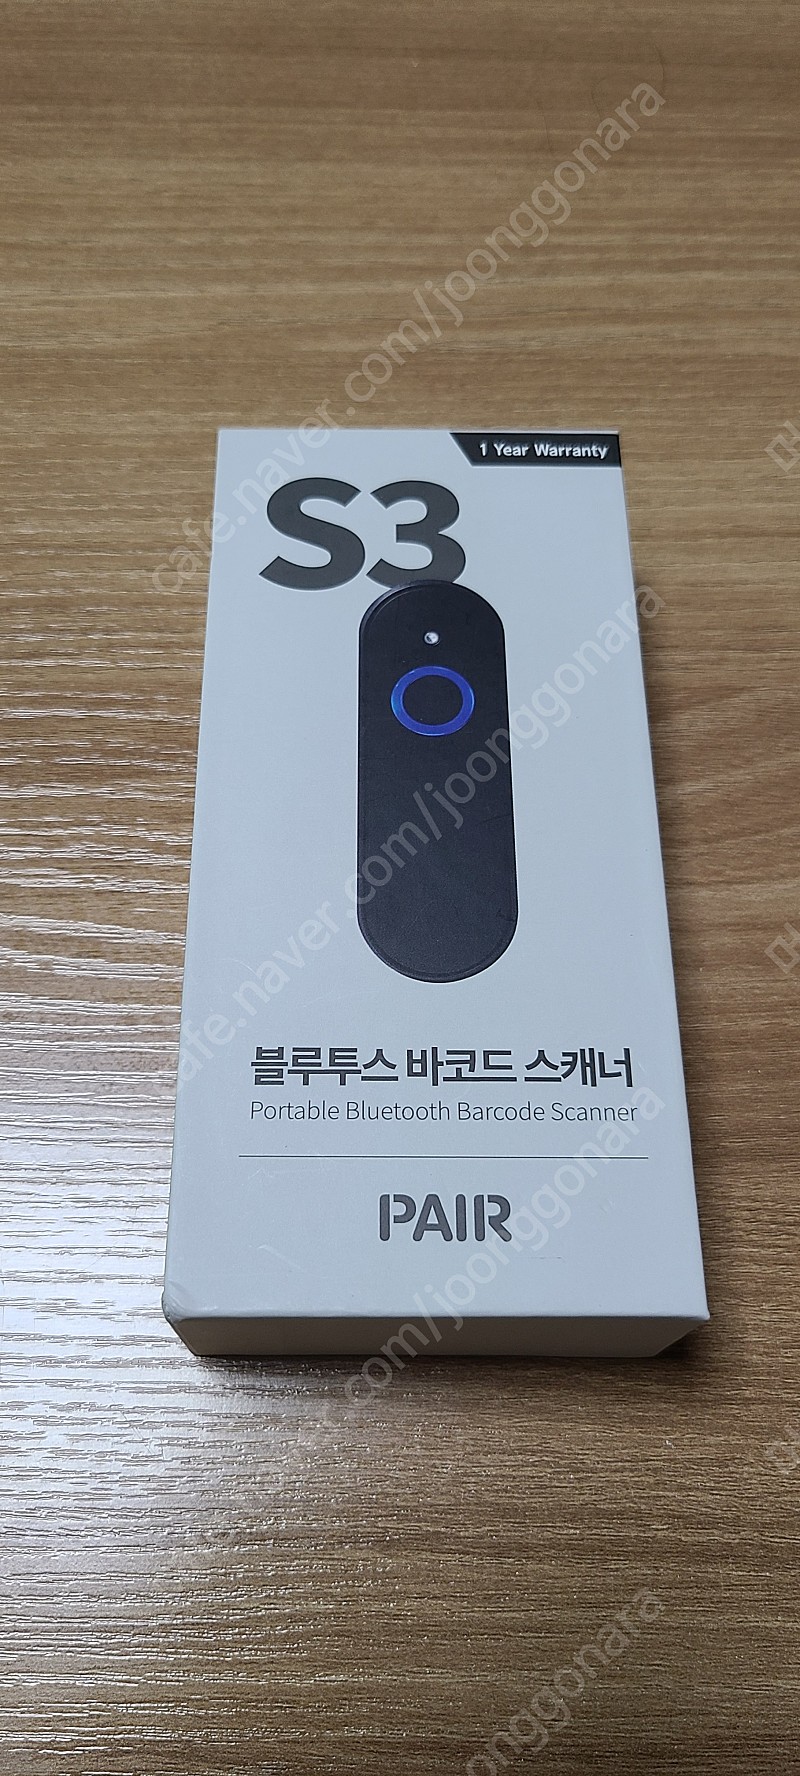 Pair s3 택배용 바코드스캐너 최신기기 판매